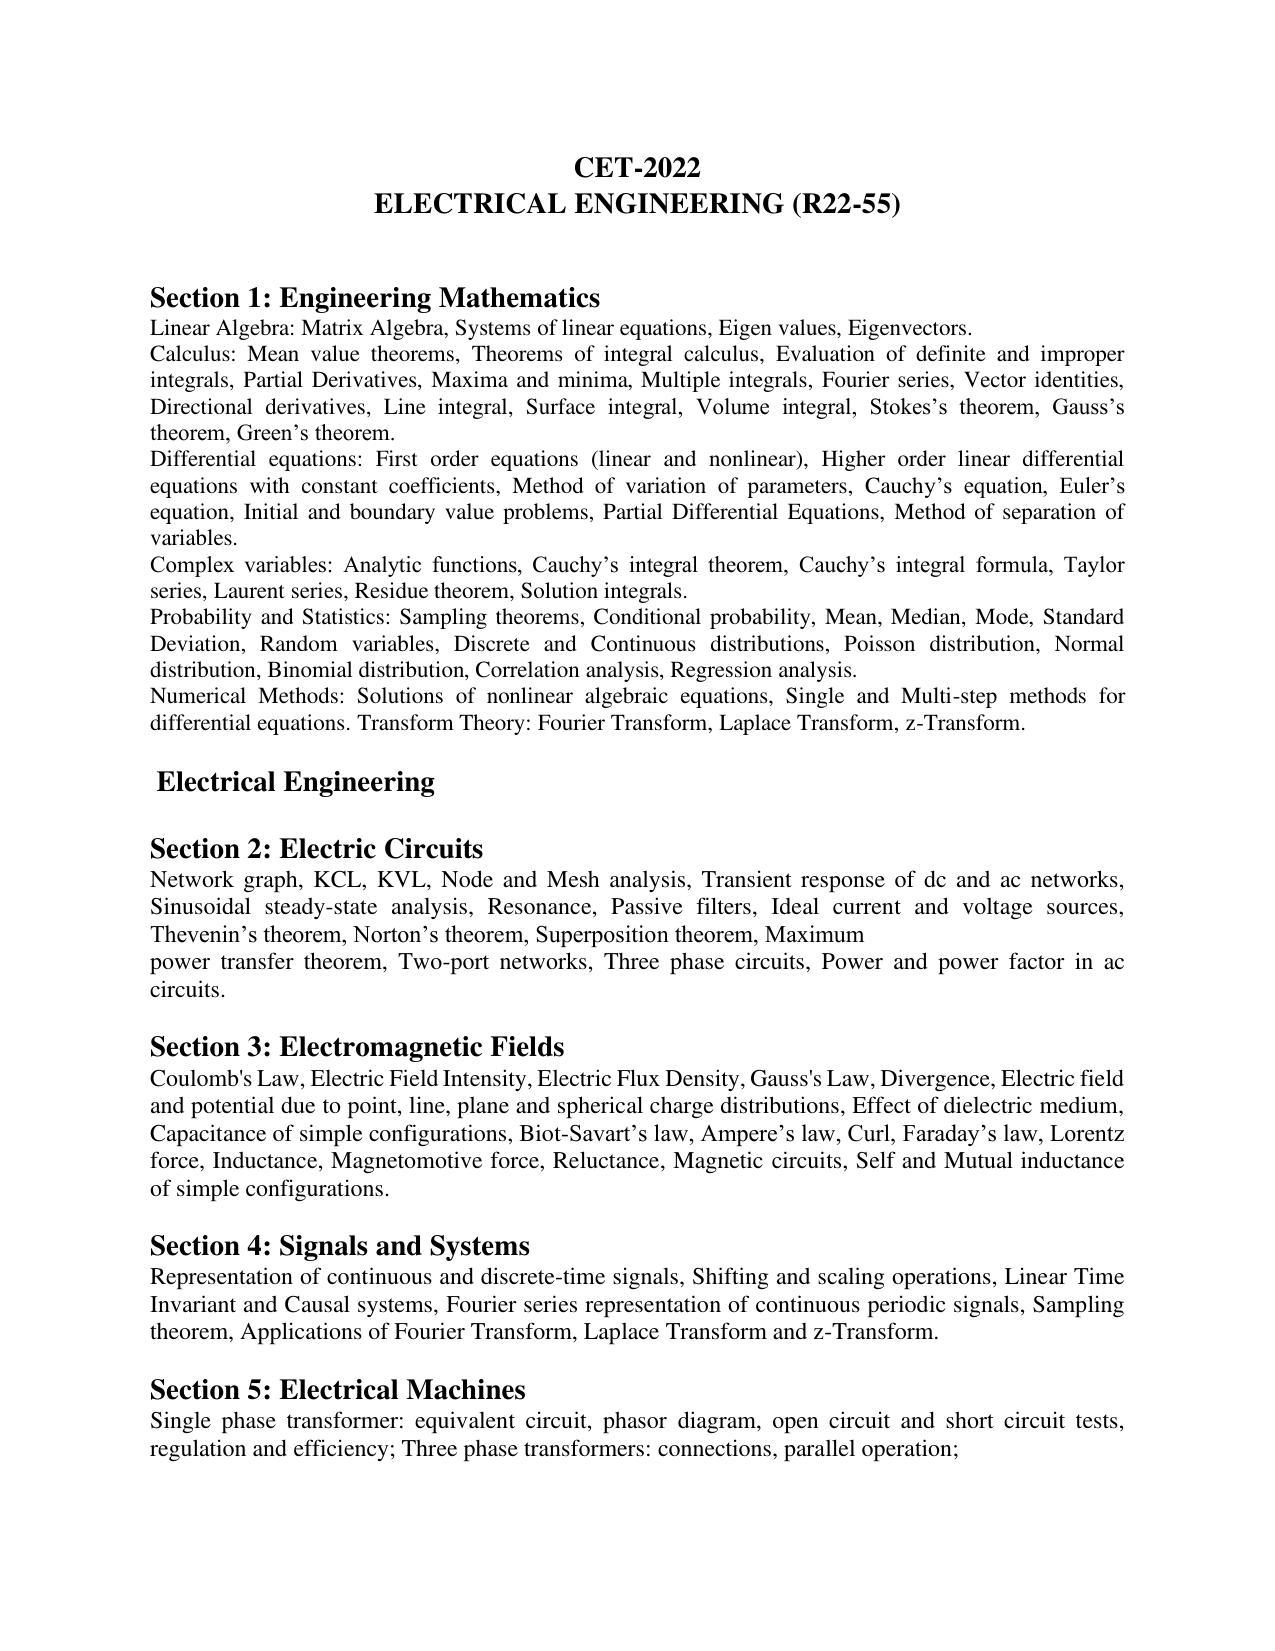 AP RCET Electrical Engineering Syllabus - Page 1